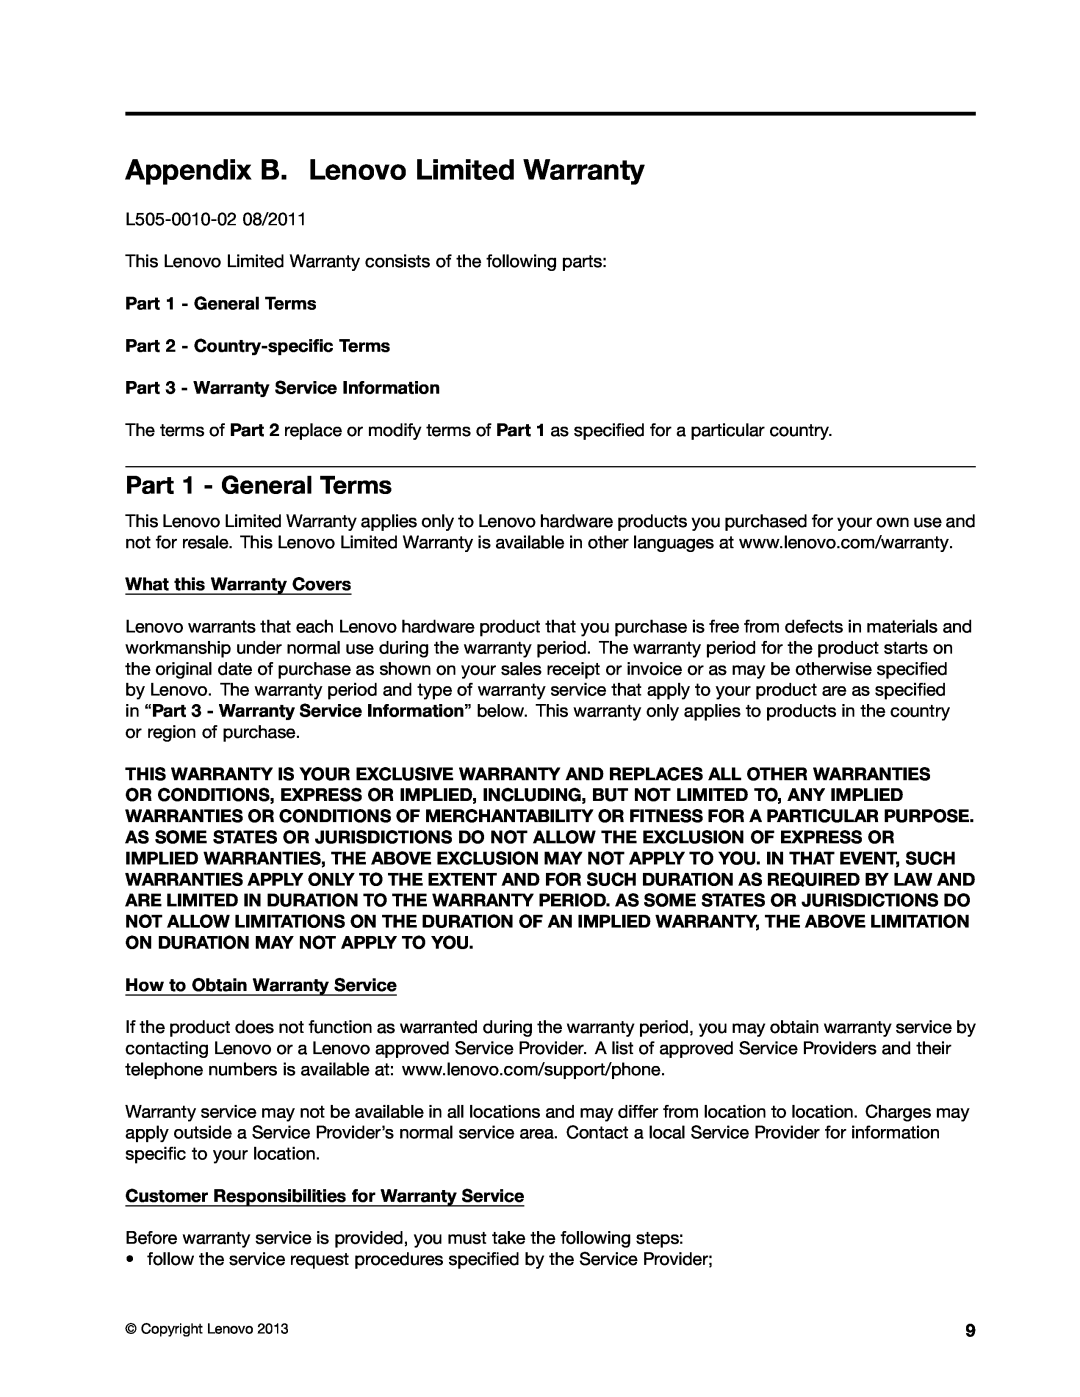 Lenovo GOBI 5000 manual Appendix B. Lenovo Limited Warranty, Part 1 - General Terms, Part 3 - Warranty Service Information 